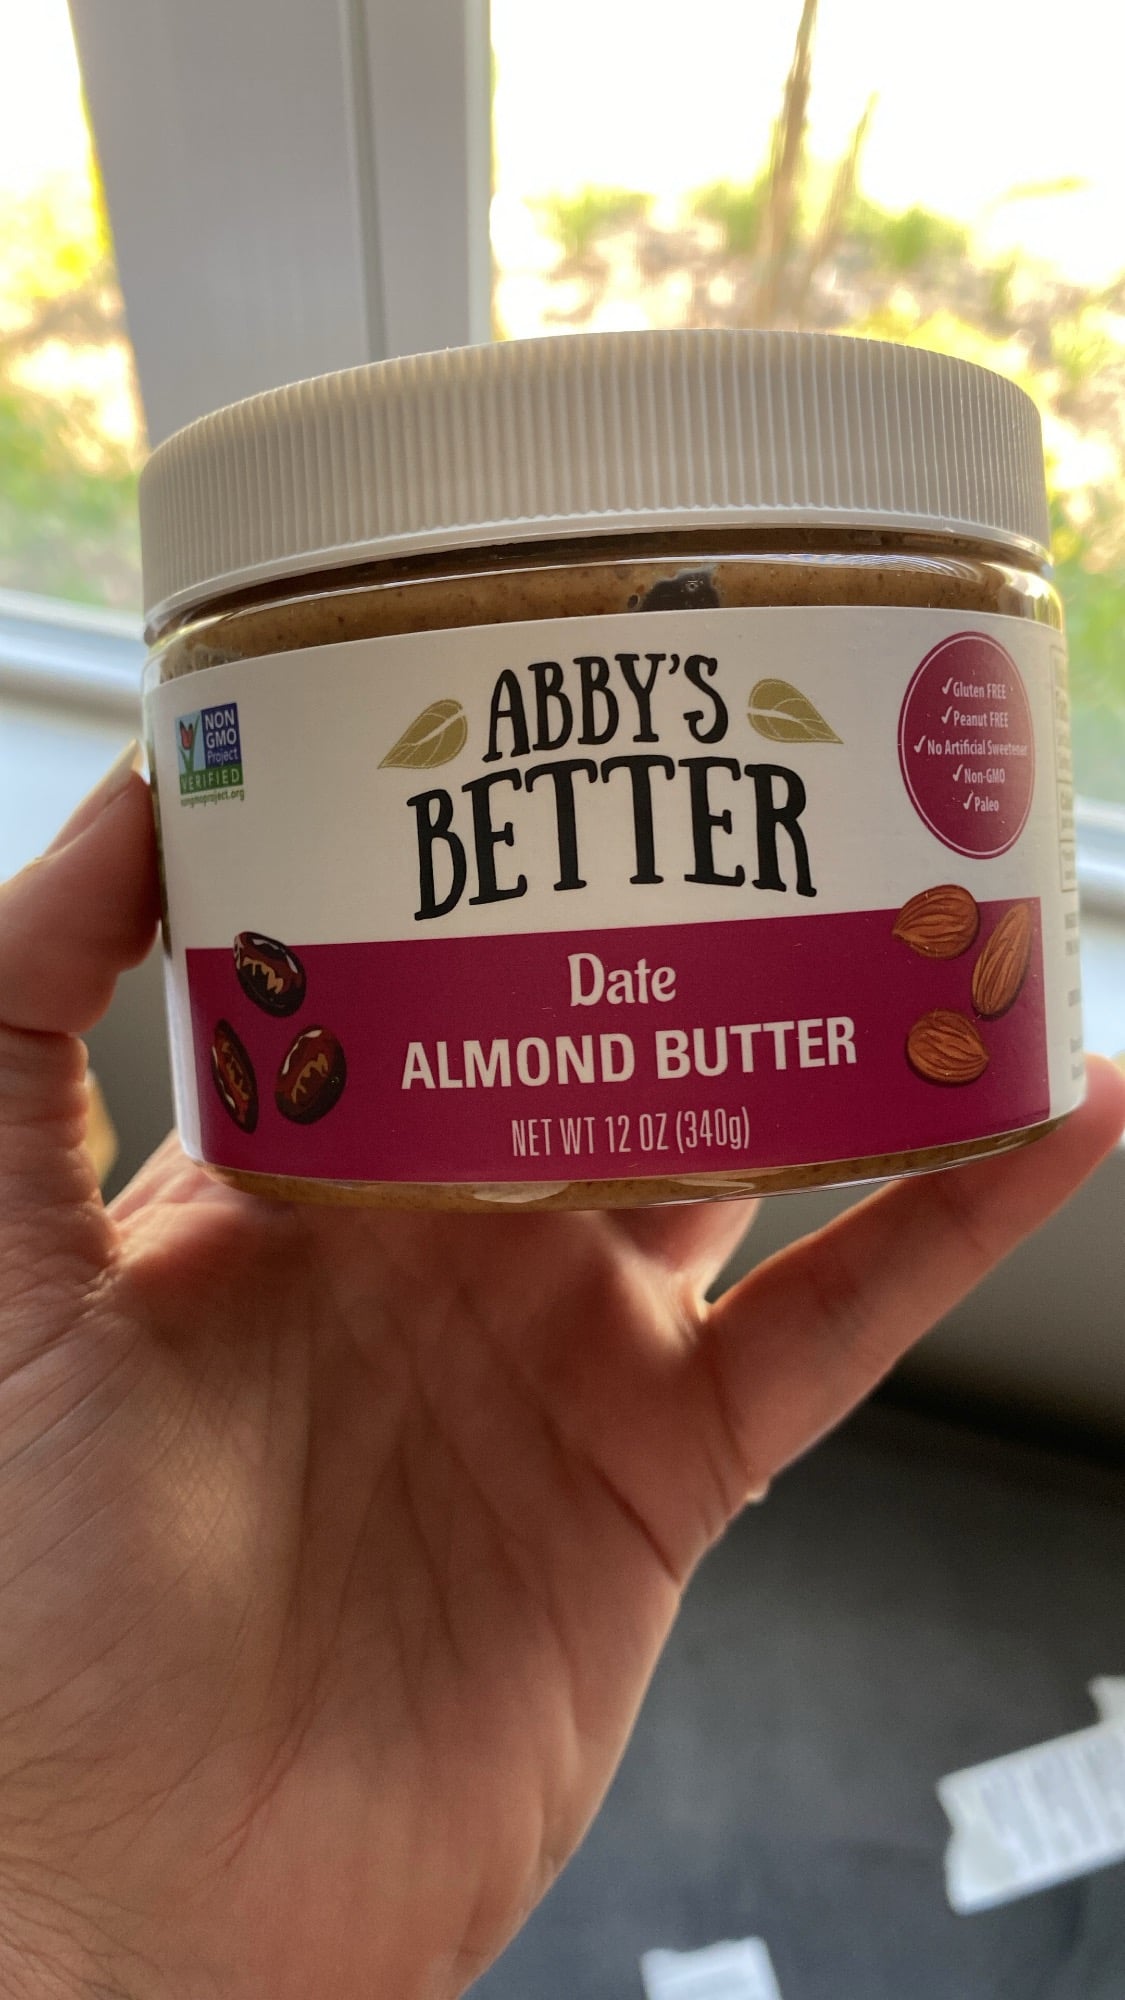 abby's better date almond butter jar held in hand